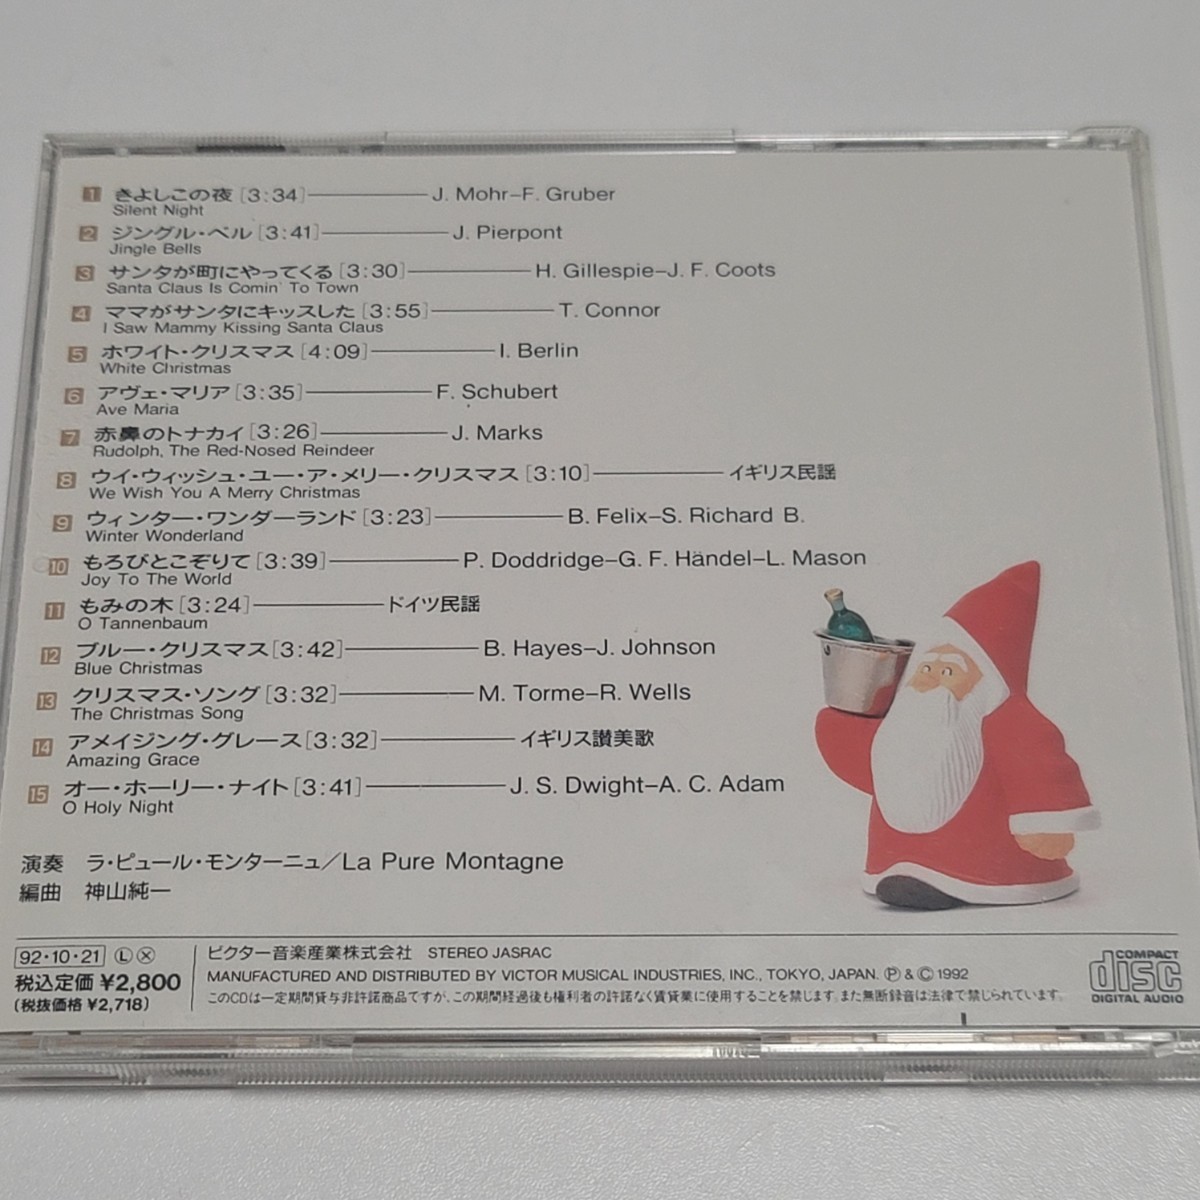 CD 浪漫音楽館 アンティーク・オルゴール・クリスマス 演奏:ラ・ピュール・モンターニュ/クリスマスソング きよしこの夜 ジングルベル 他 